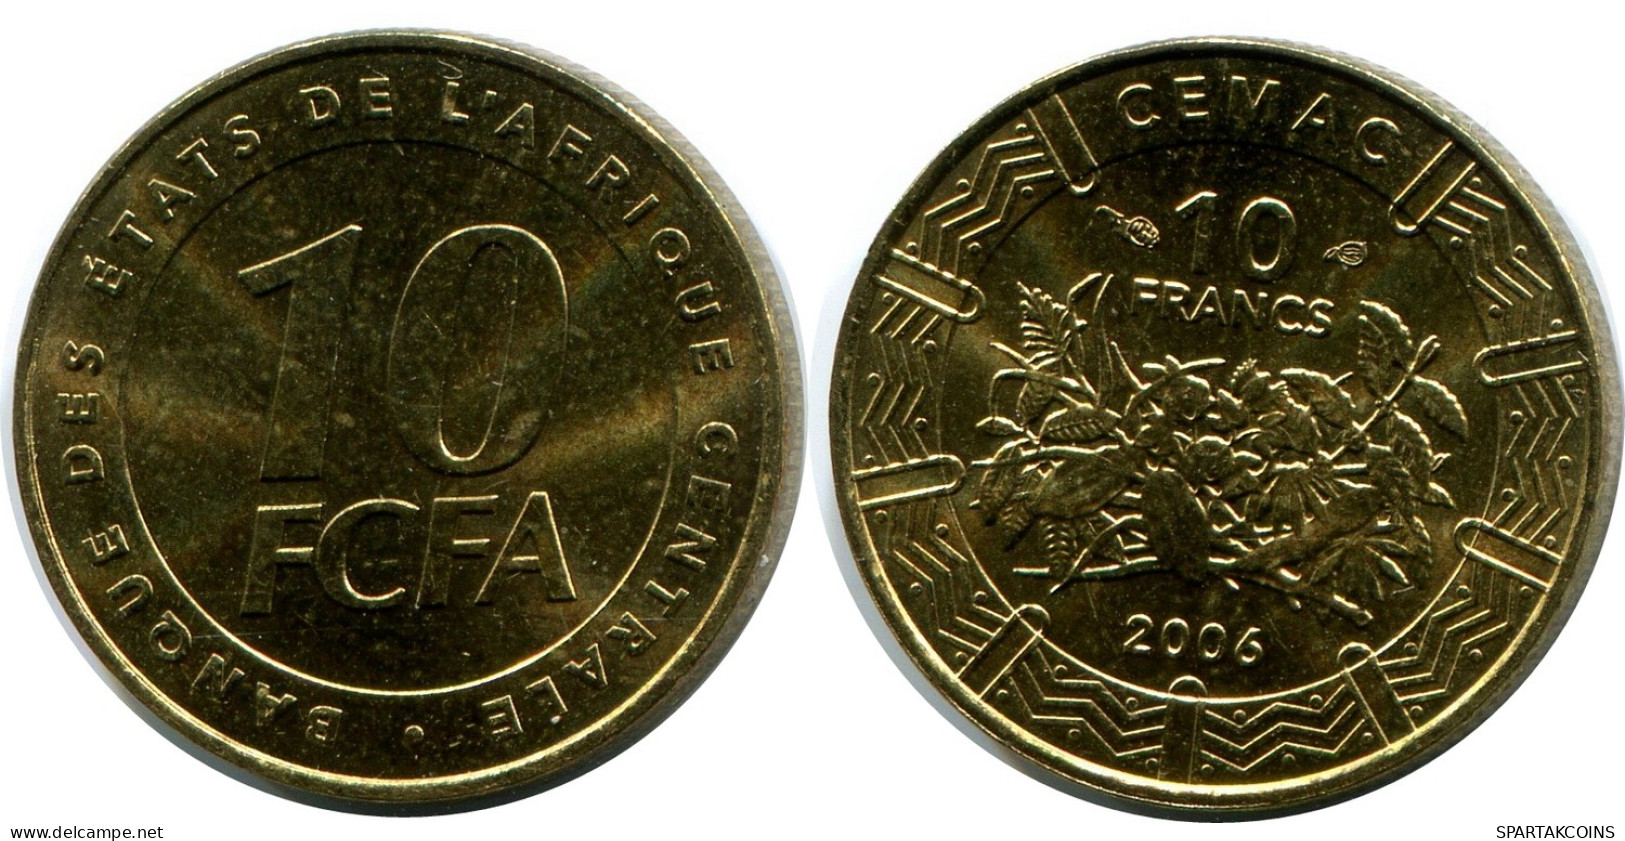 10 FRANCS CFA 2006 CENTRAL AFRICAN STATES (BEAC) Coin #AP862.U - Centrafricaine (République)